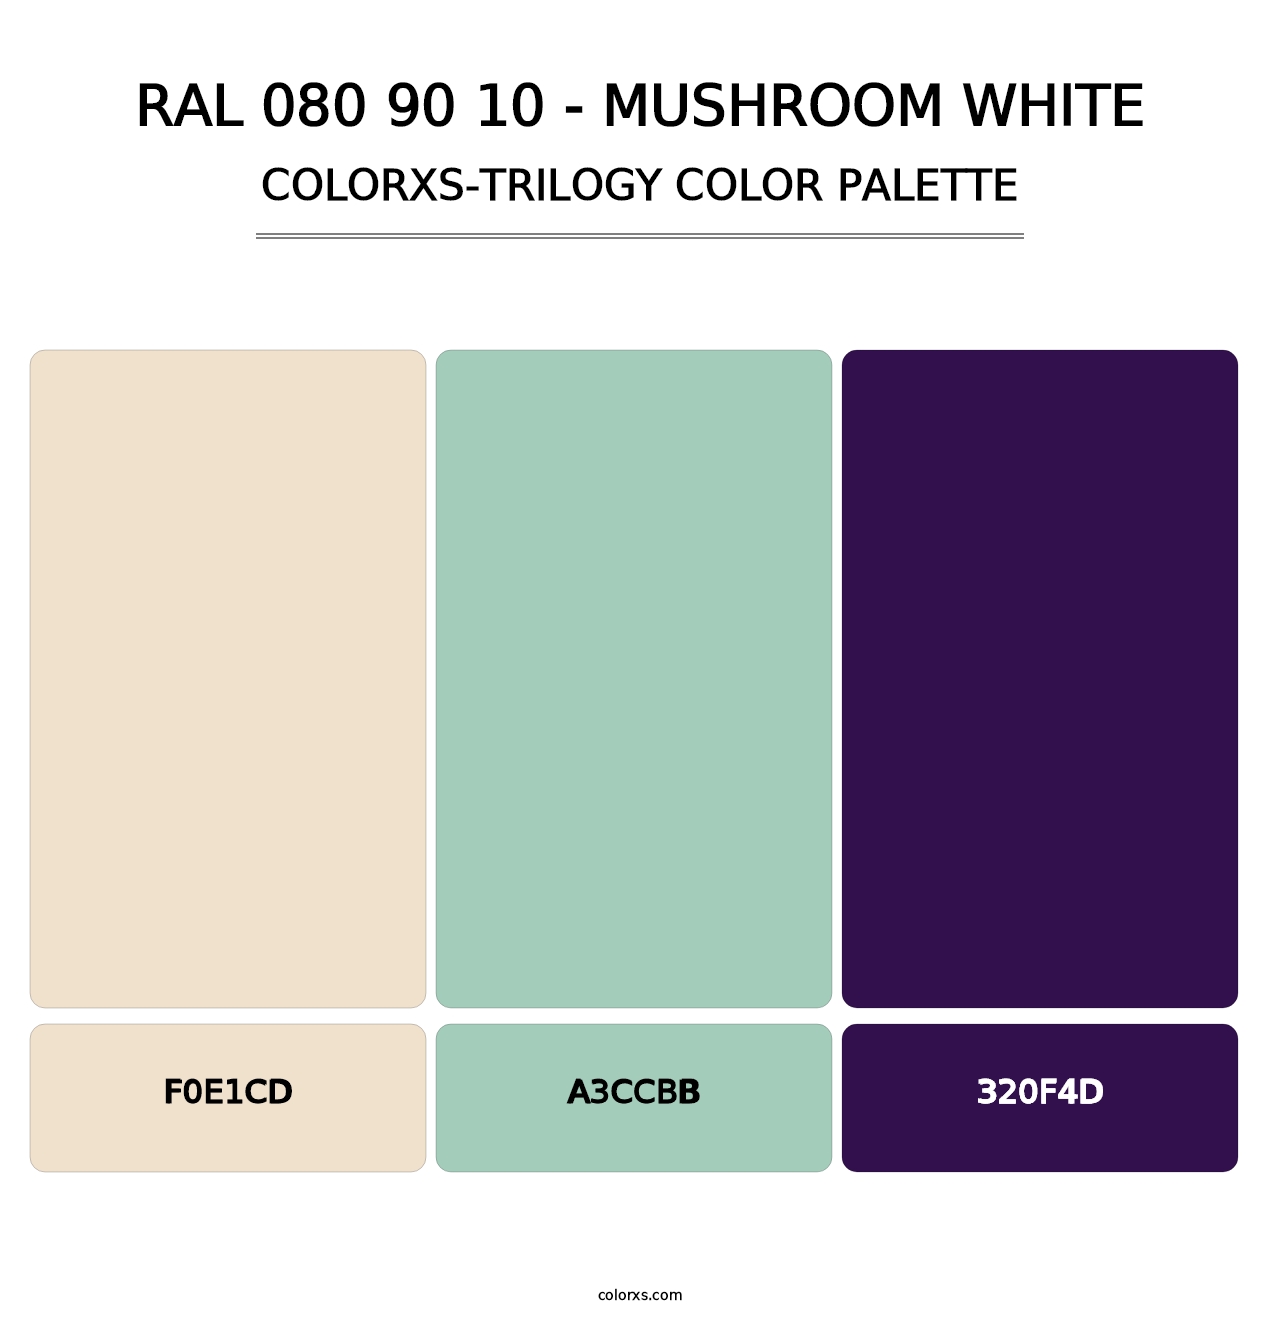 RAL 080 90 10 - Mushroom White - Colorxs Trilogy Palette